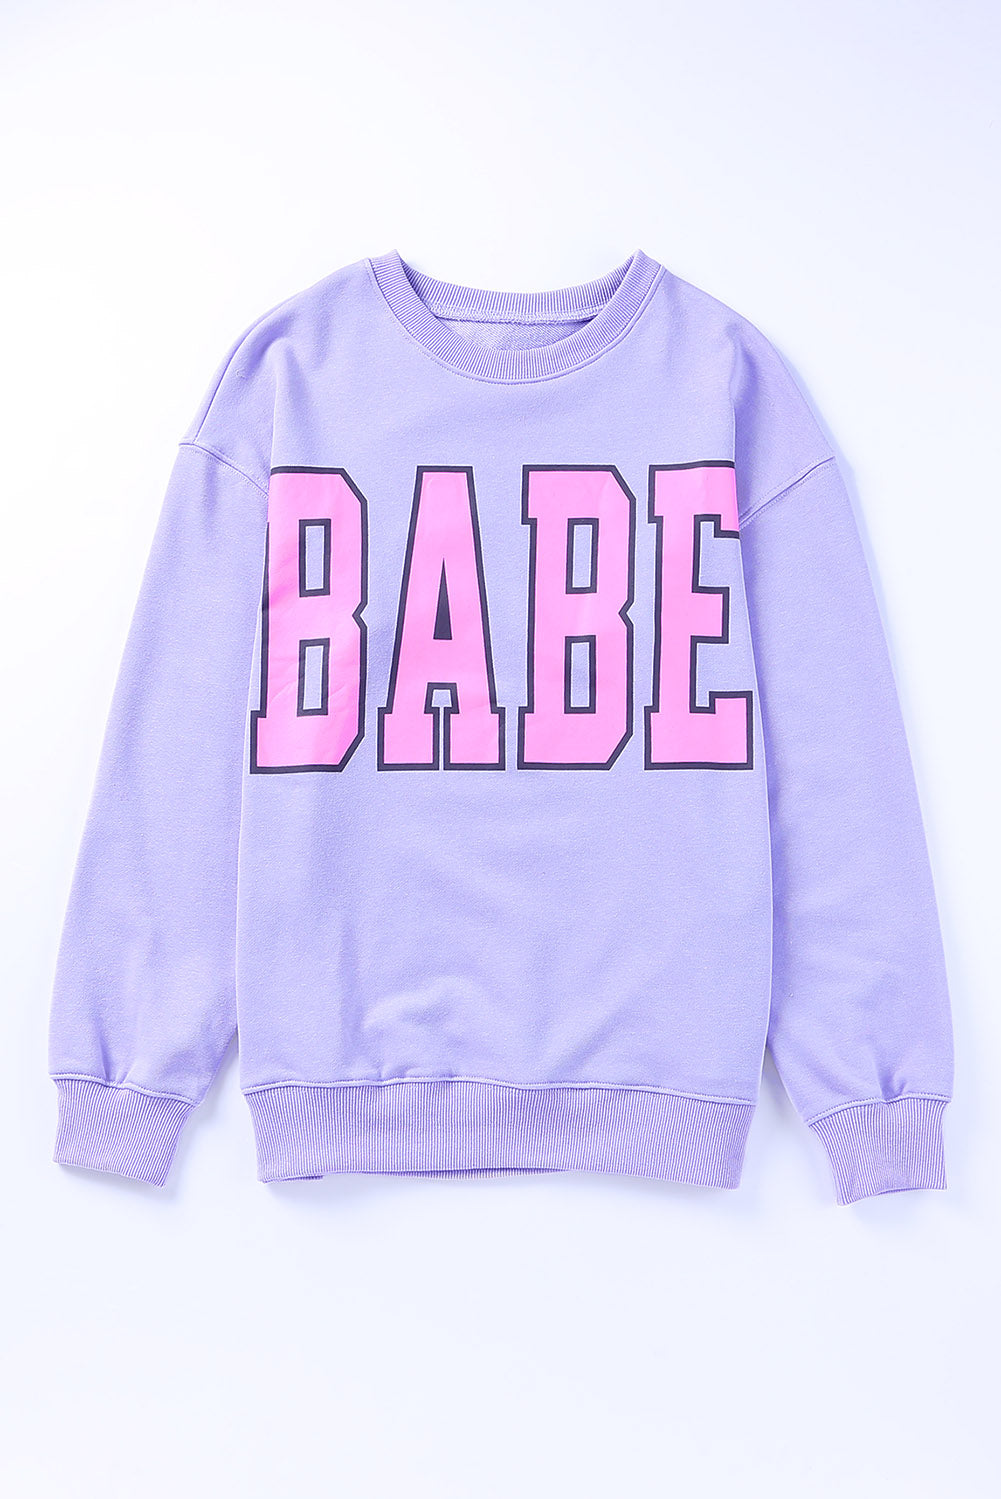 Gray BABE Letter Graphic Pullover Sweatshirt Sweatshirts & Hoodies JT's Designer Fashion